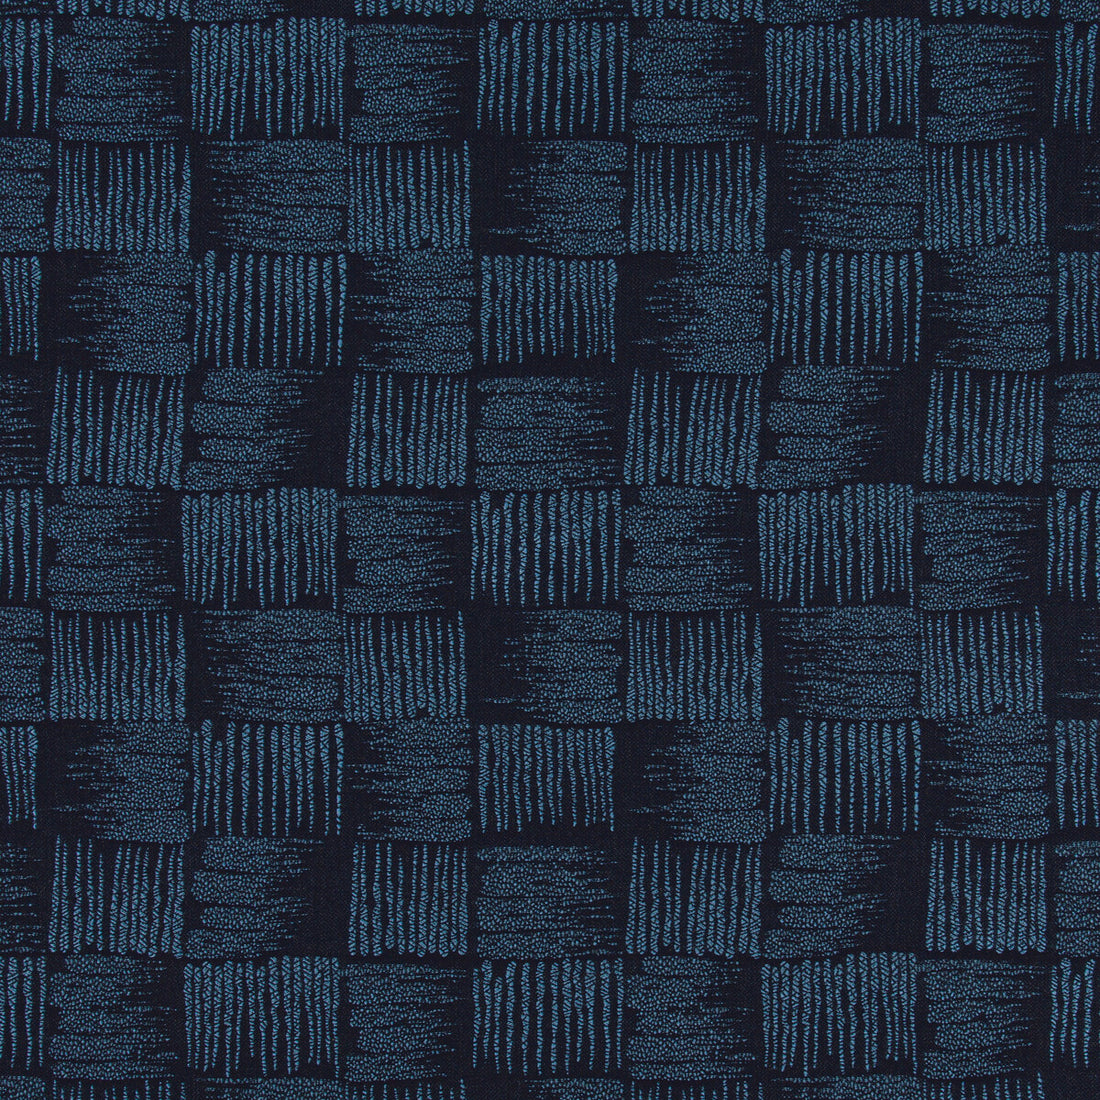 Lj Grw fabric - pattern 2019141.50.0 - by Lee Jofa Modern in the Kw Terra Firma III Indoor Outdoor collection